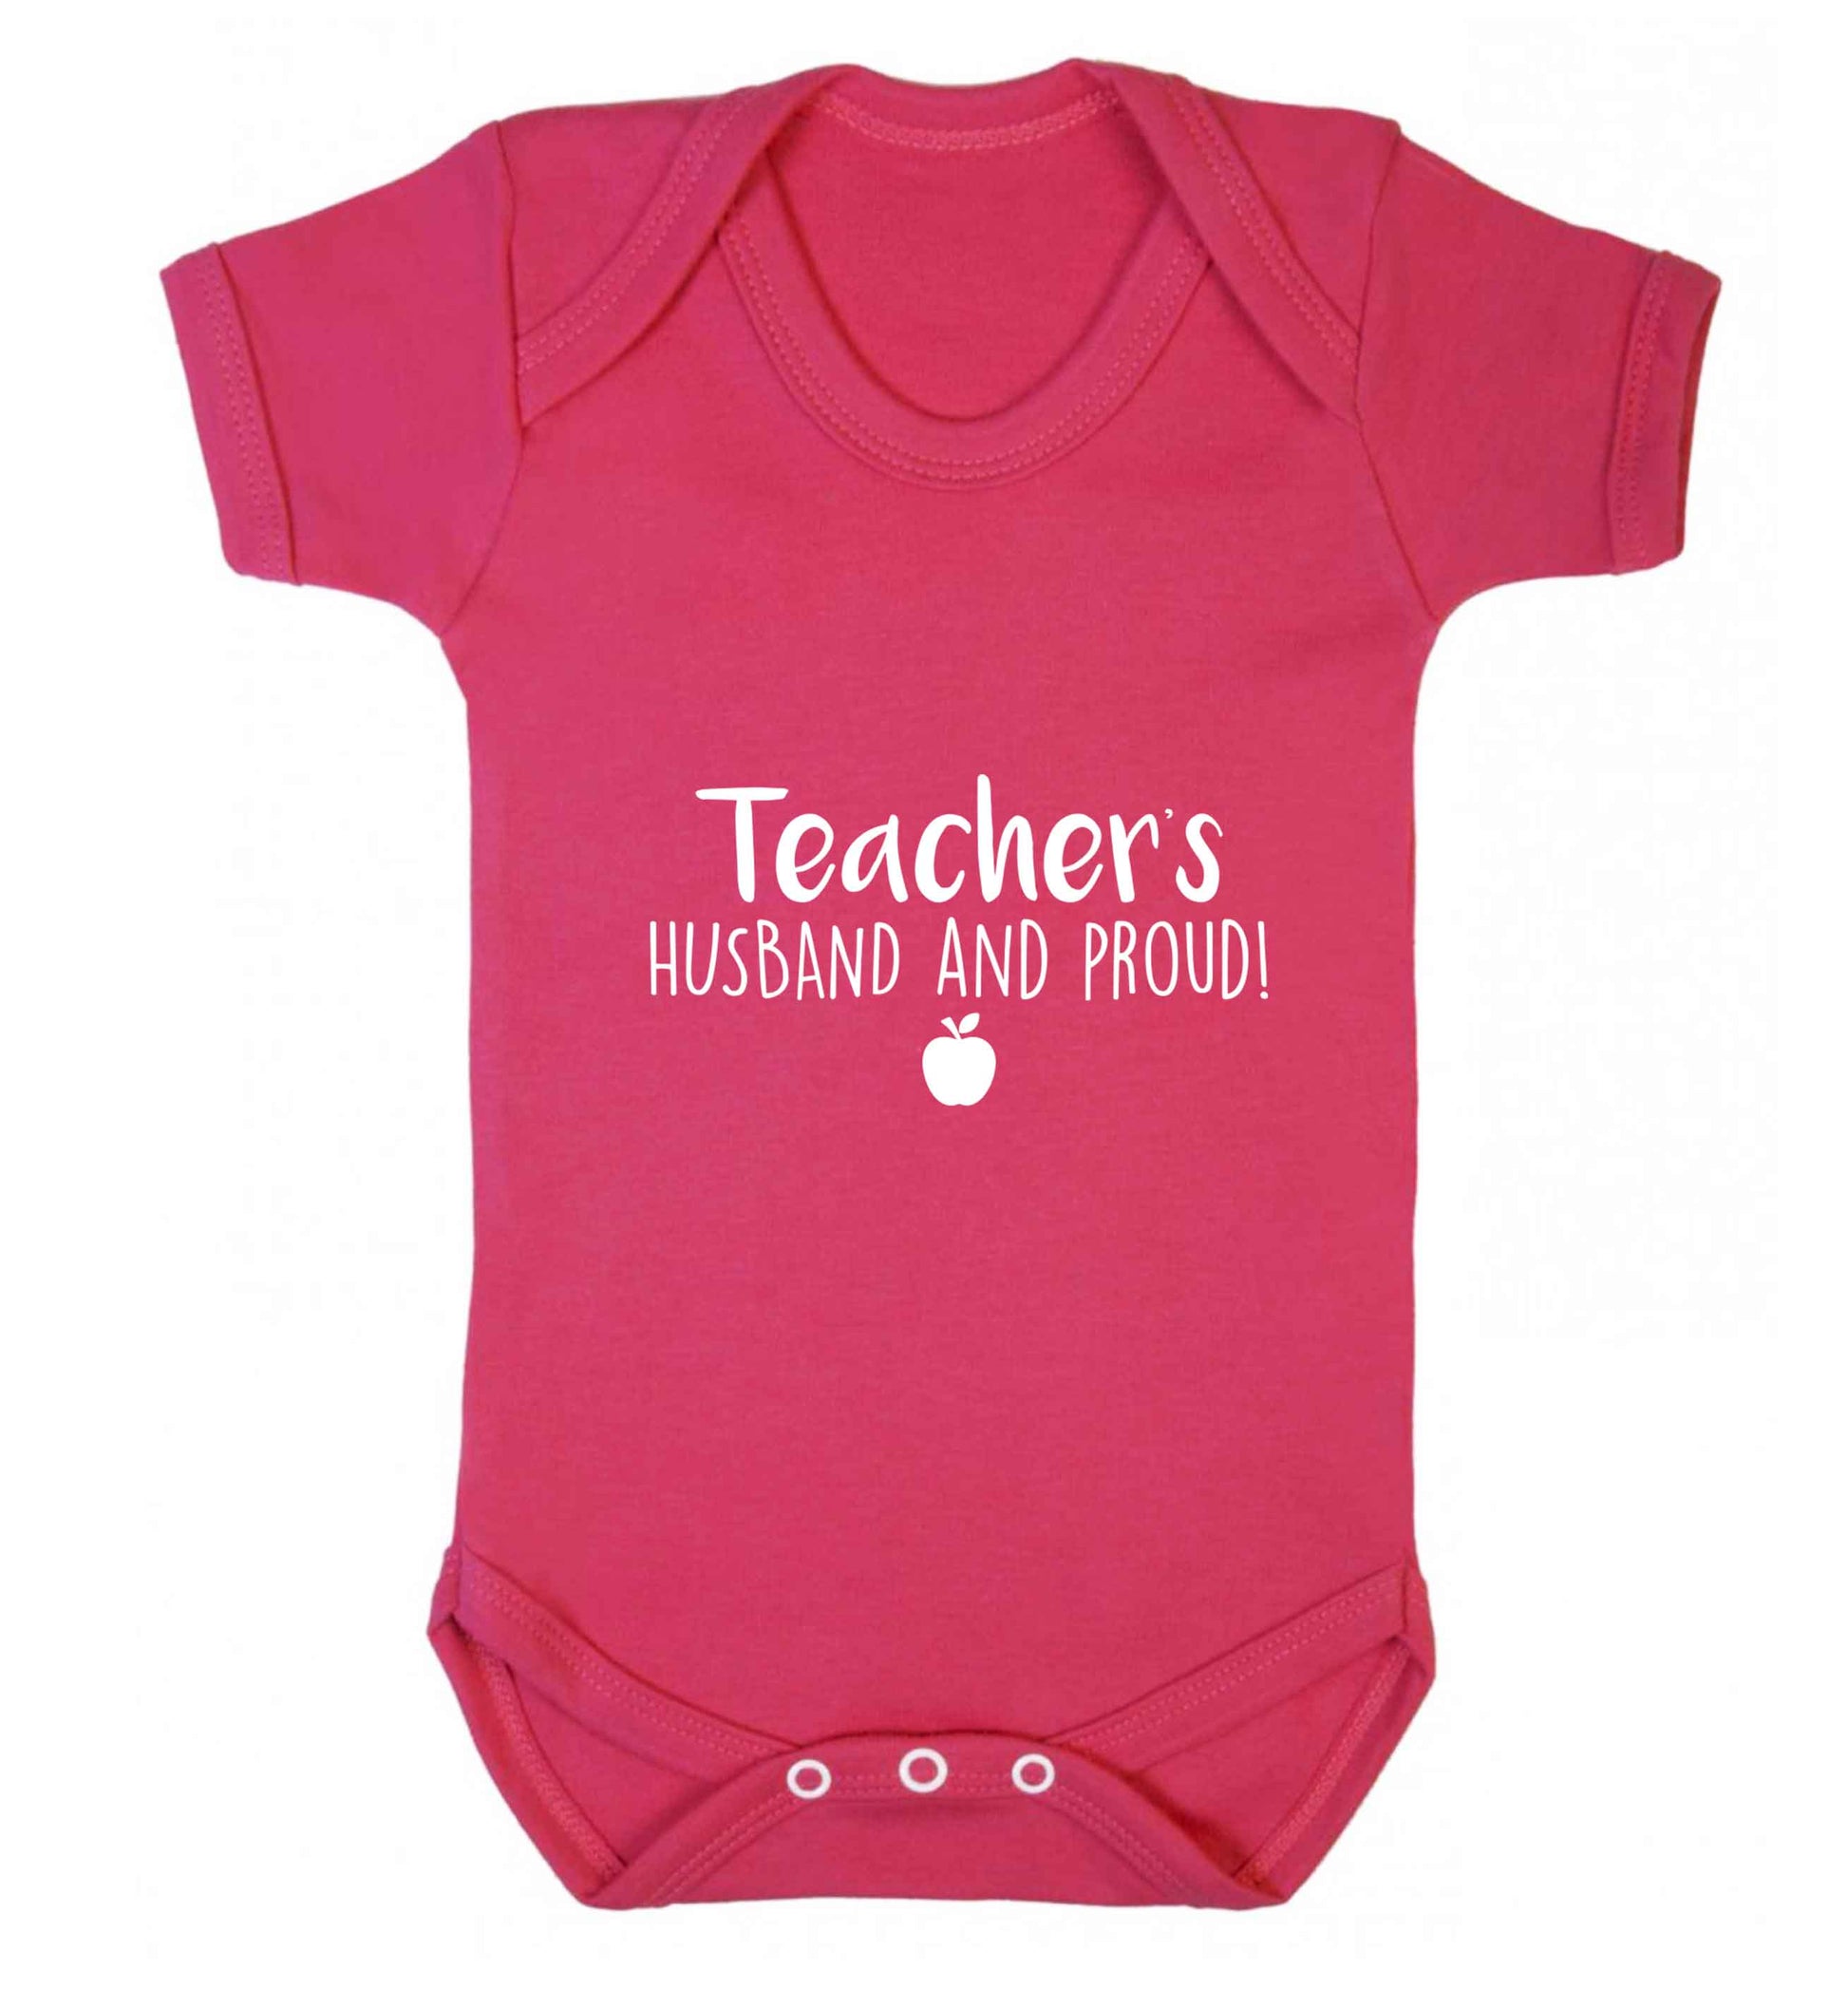 Teachers husband and proud baby vest dark pink 18-24 months